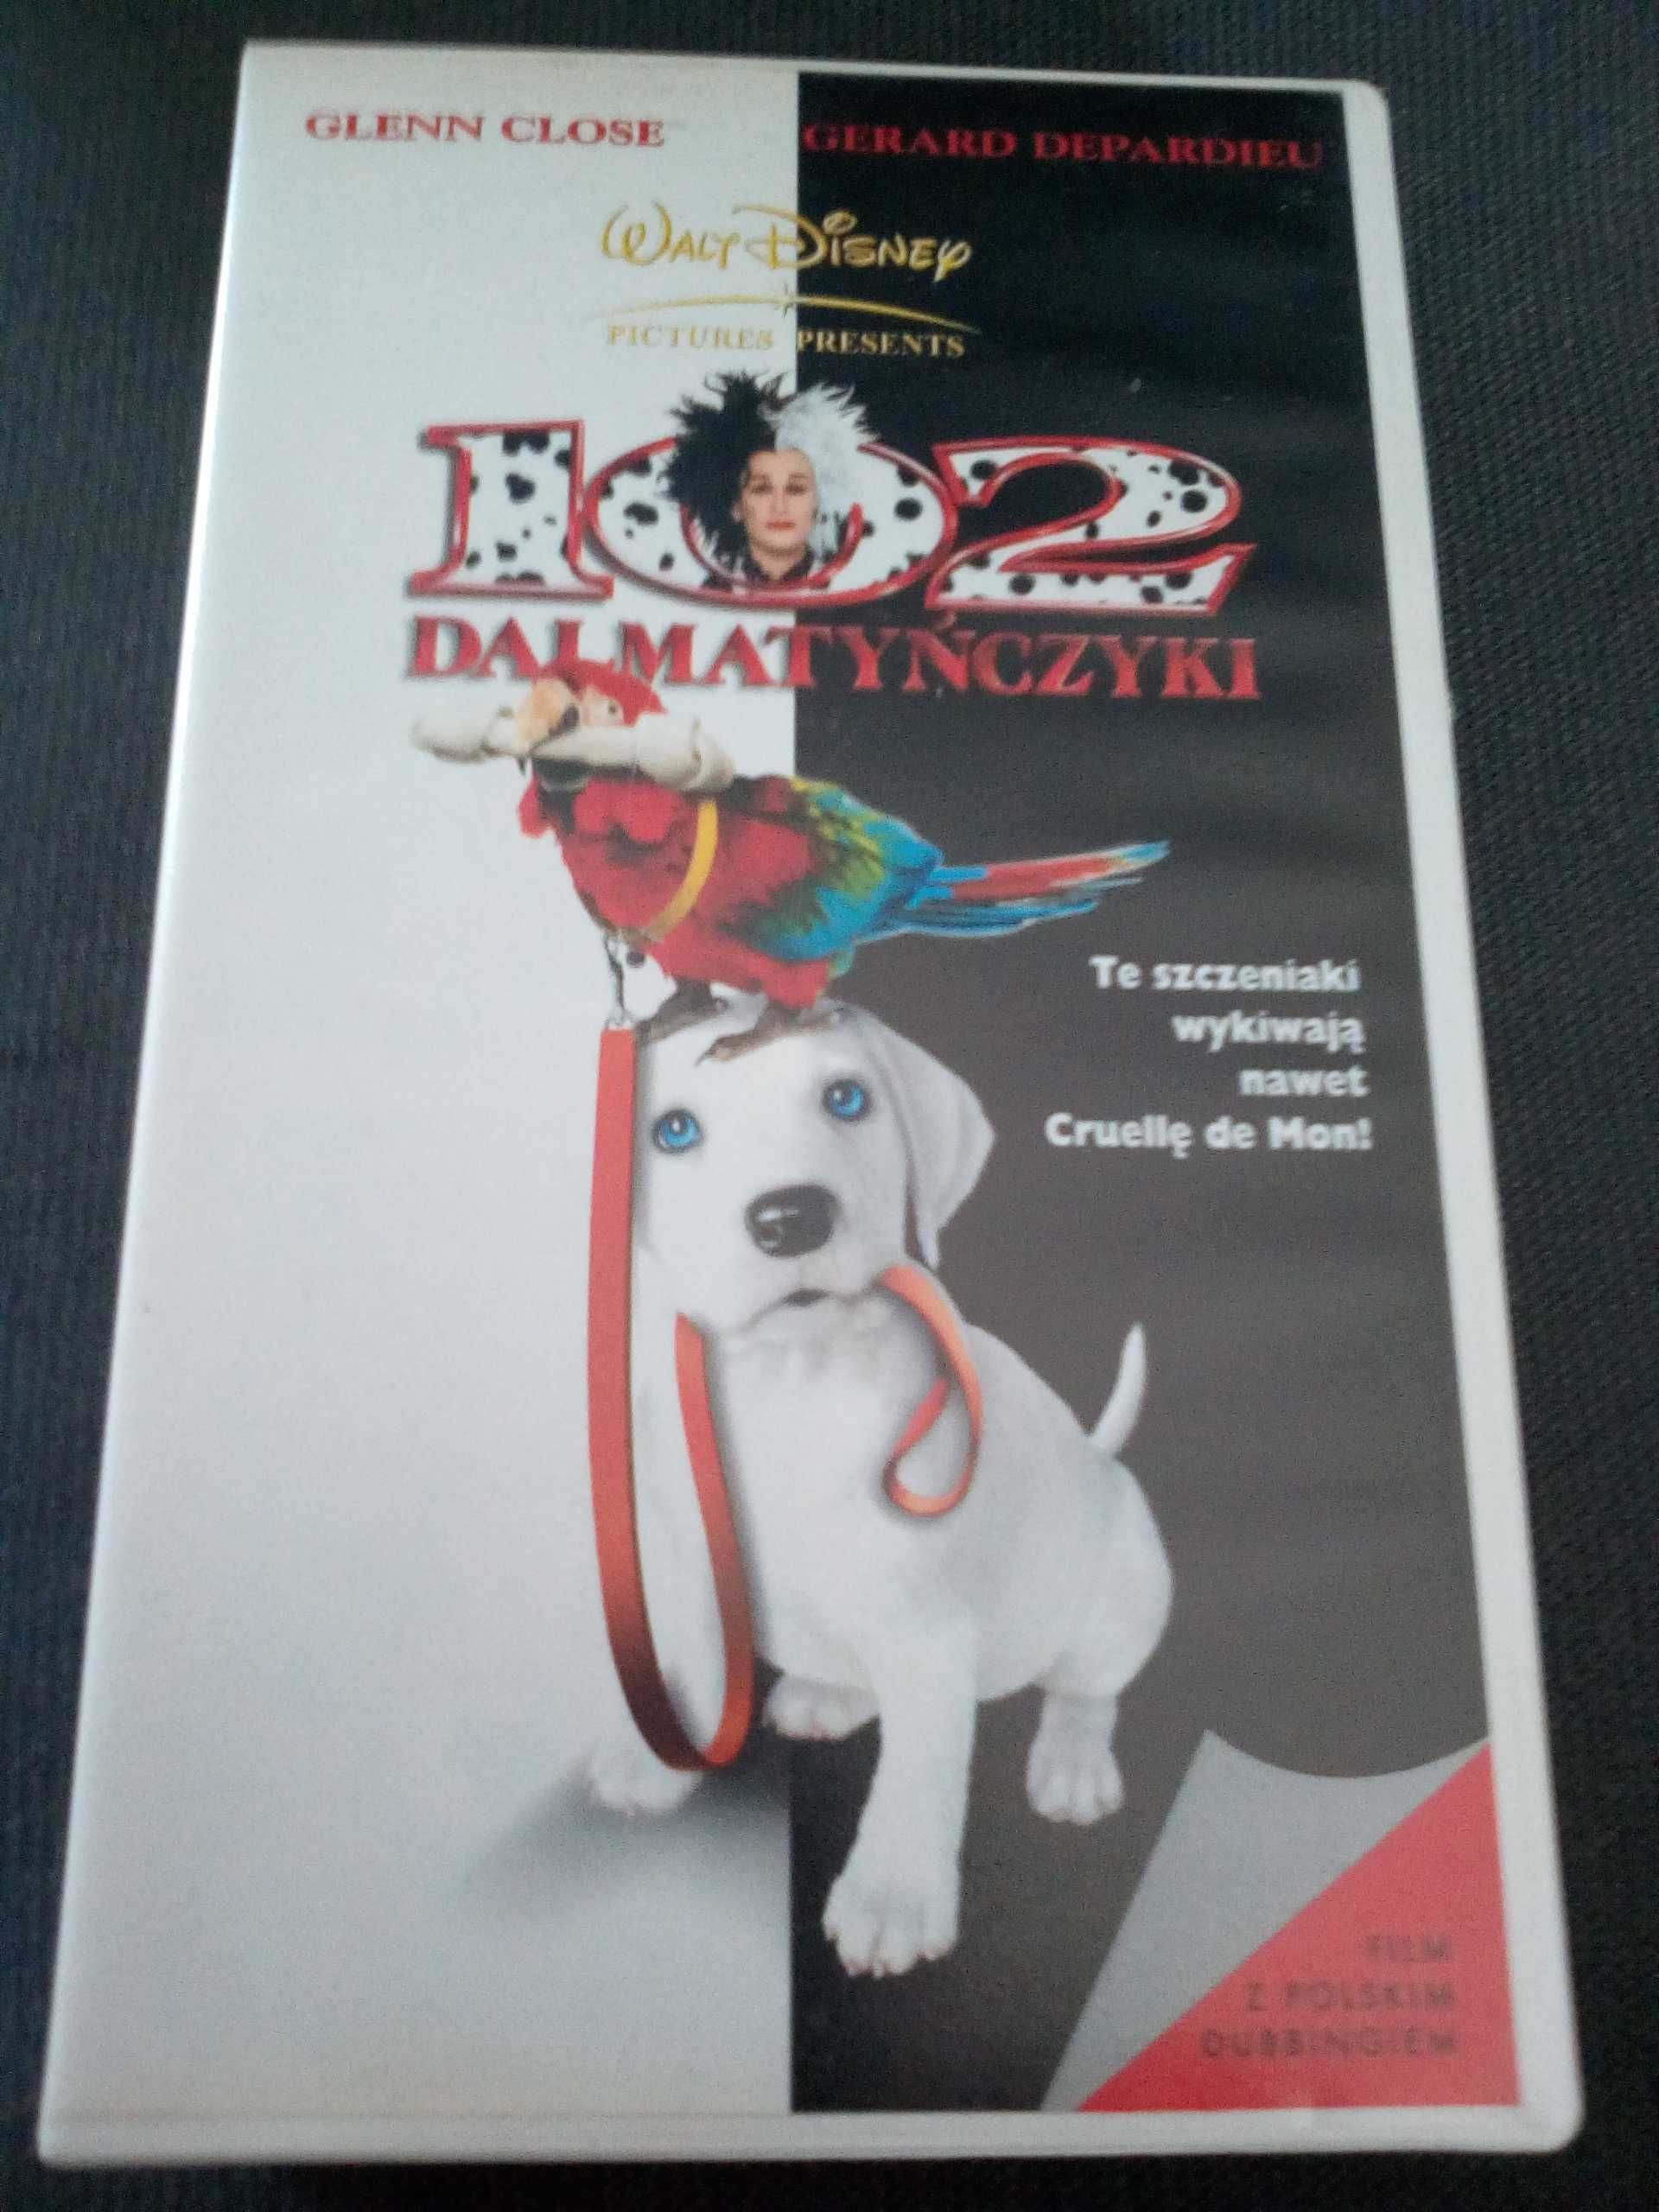 Kaseta VHS 102 Dalmatyńczyki polski dubbing